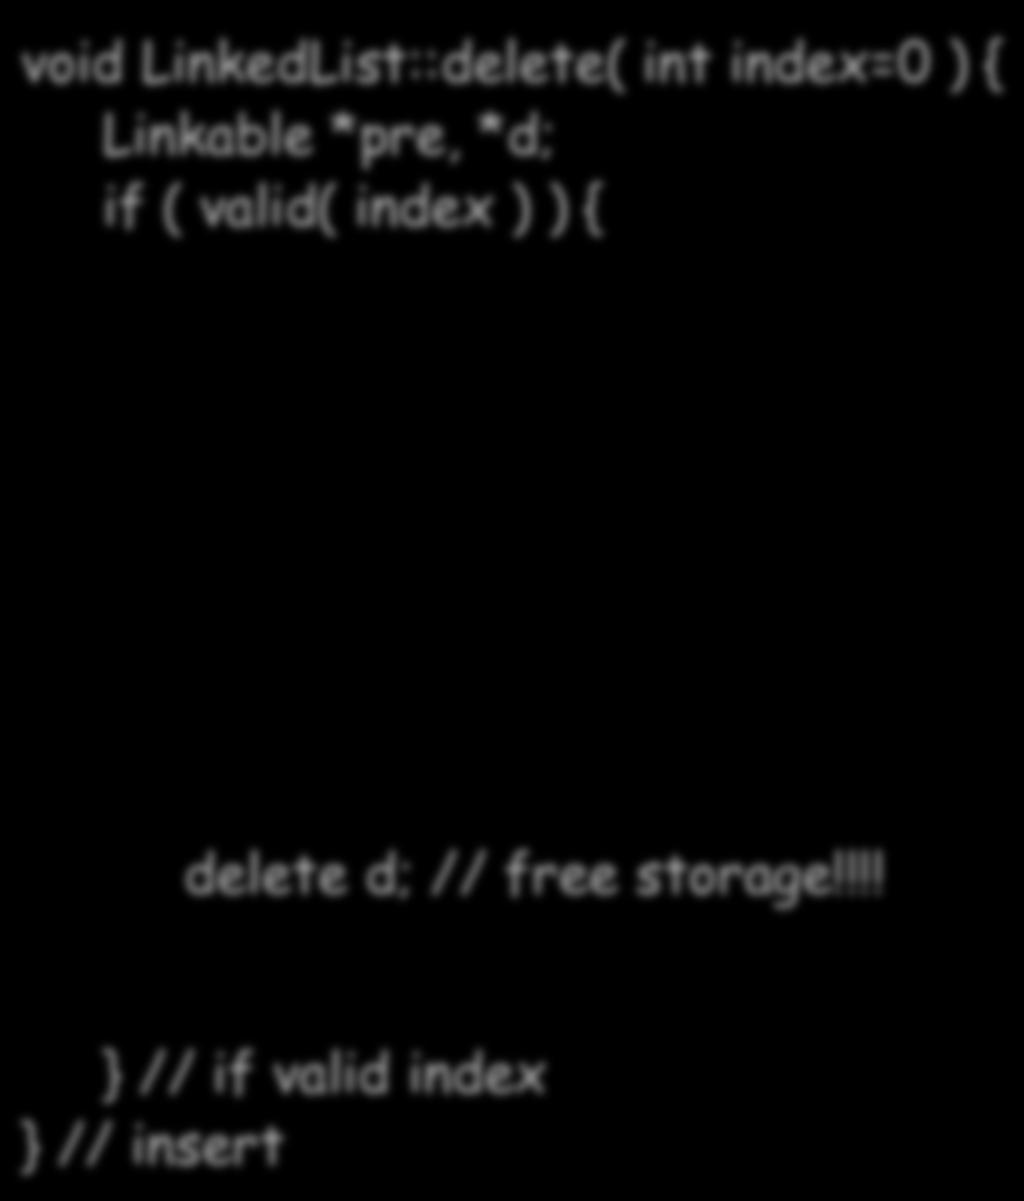 deleting void LinkedList::delete( int index=0 ) { Linkable *pre, *d; if ( valid( index ) ) { if ( index == 0 ) { // first element d = _first; case 1: delete first element _first = d->next(); //